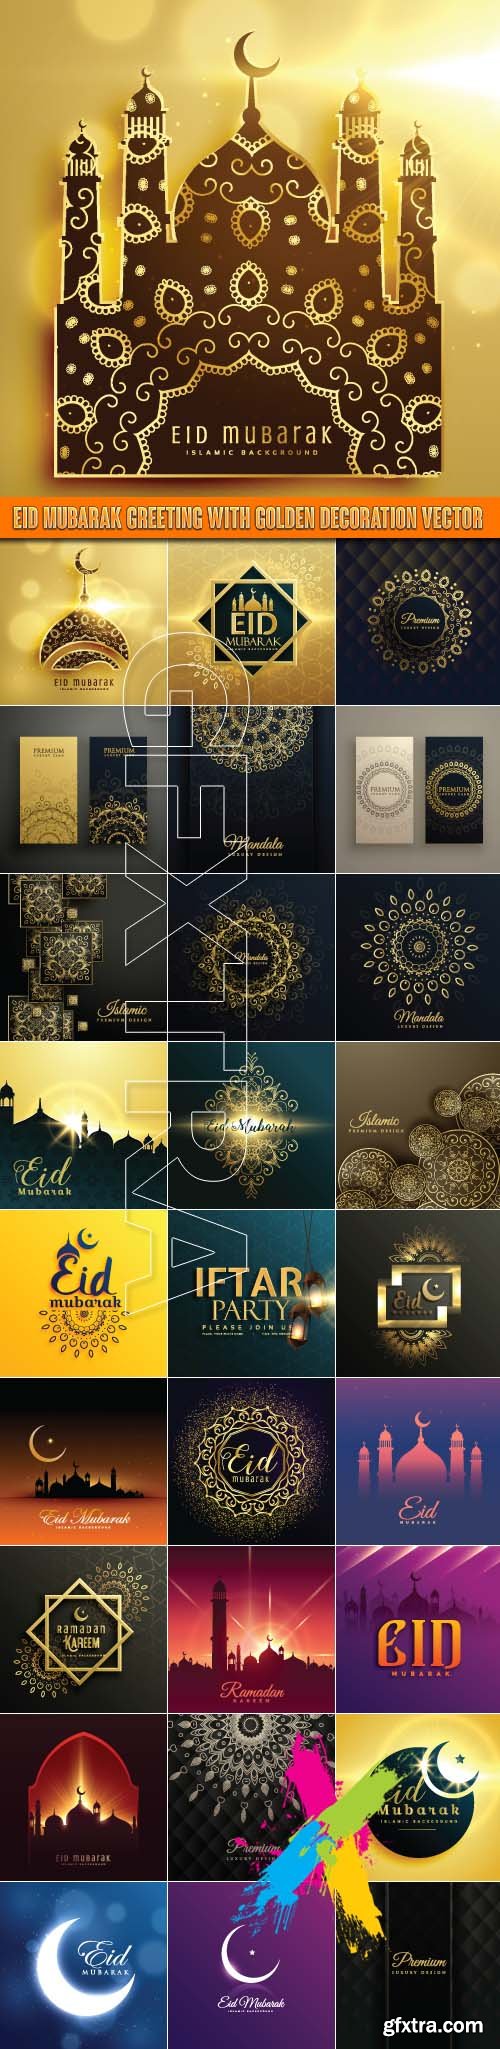 Eid mubarak greeting with golden decoration vector